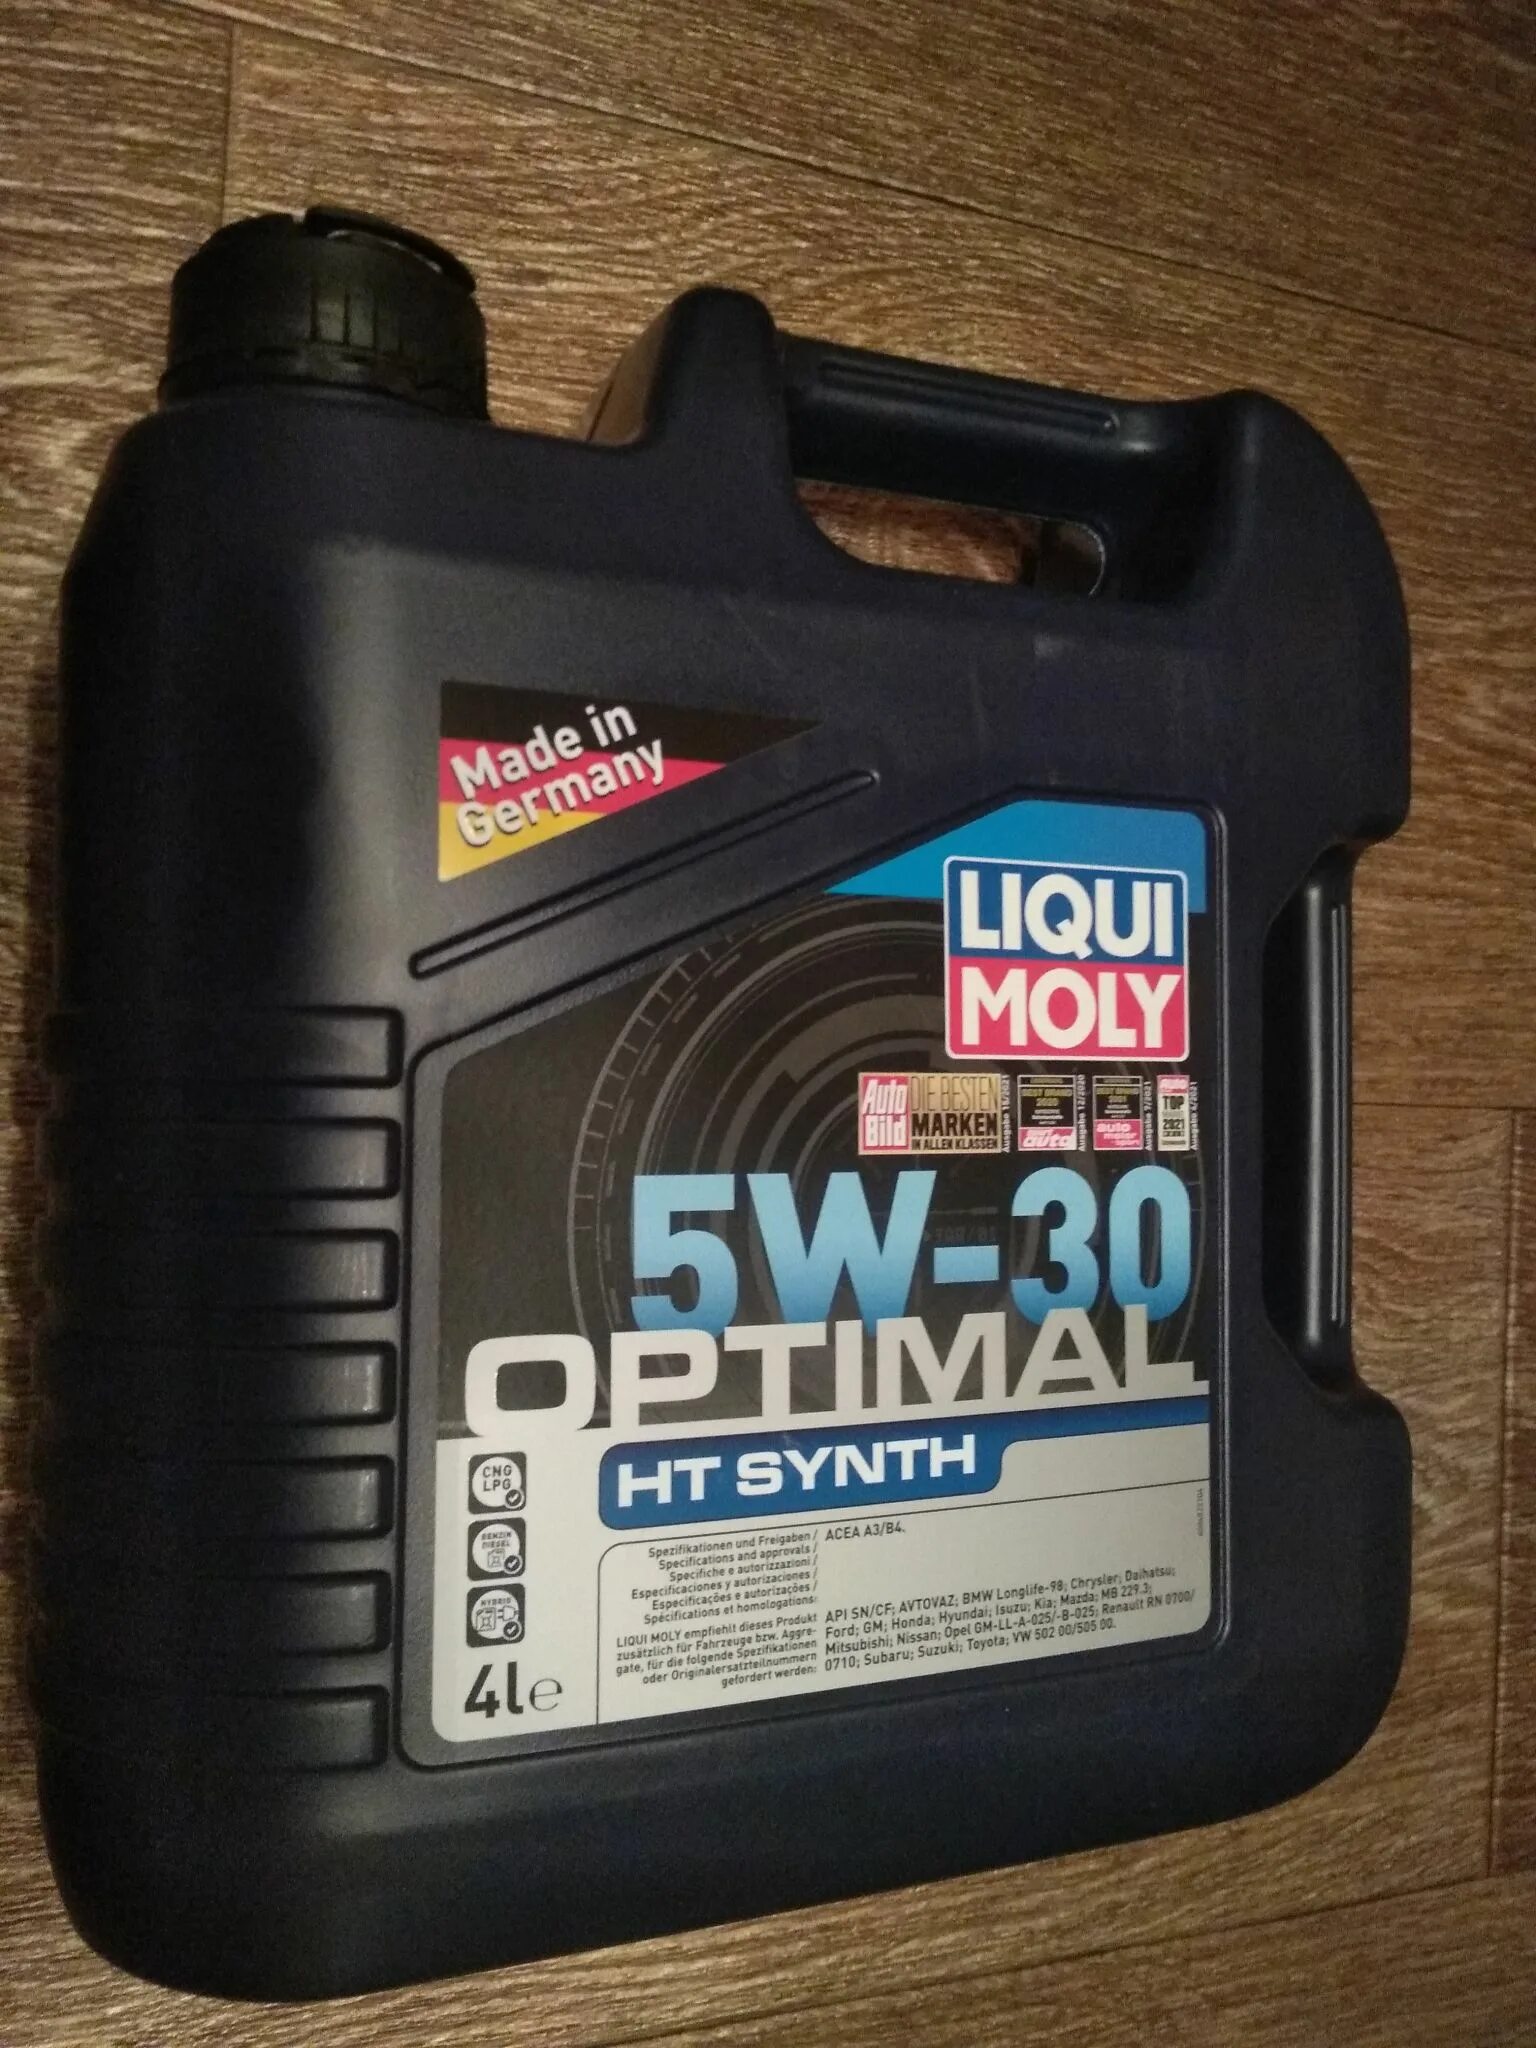 Liqui Moly 5w30 OPTIMAL Synth. Масло Liqui Moly 5w30 OPTIMAL HT Synth. OPTIMAL Synth 5w-30. Ликви моли OPTIMAL HT Synth 5w-30. Liqui moly масло optimal synth